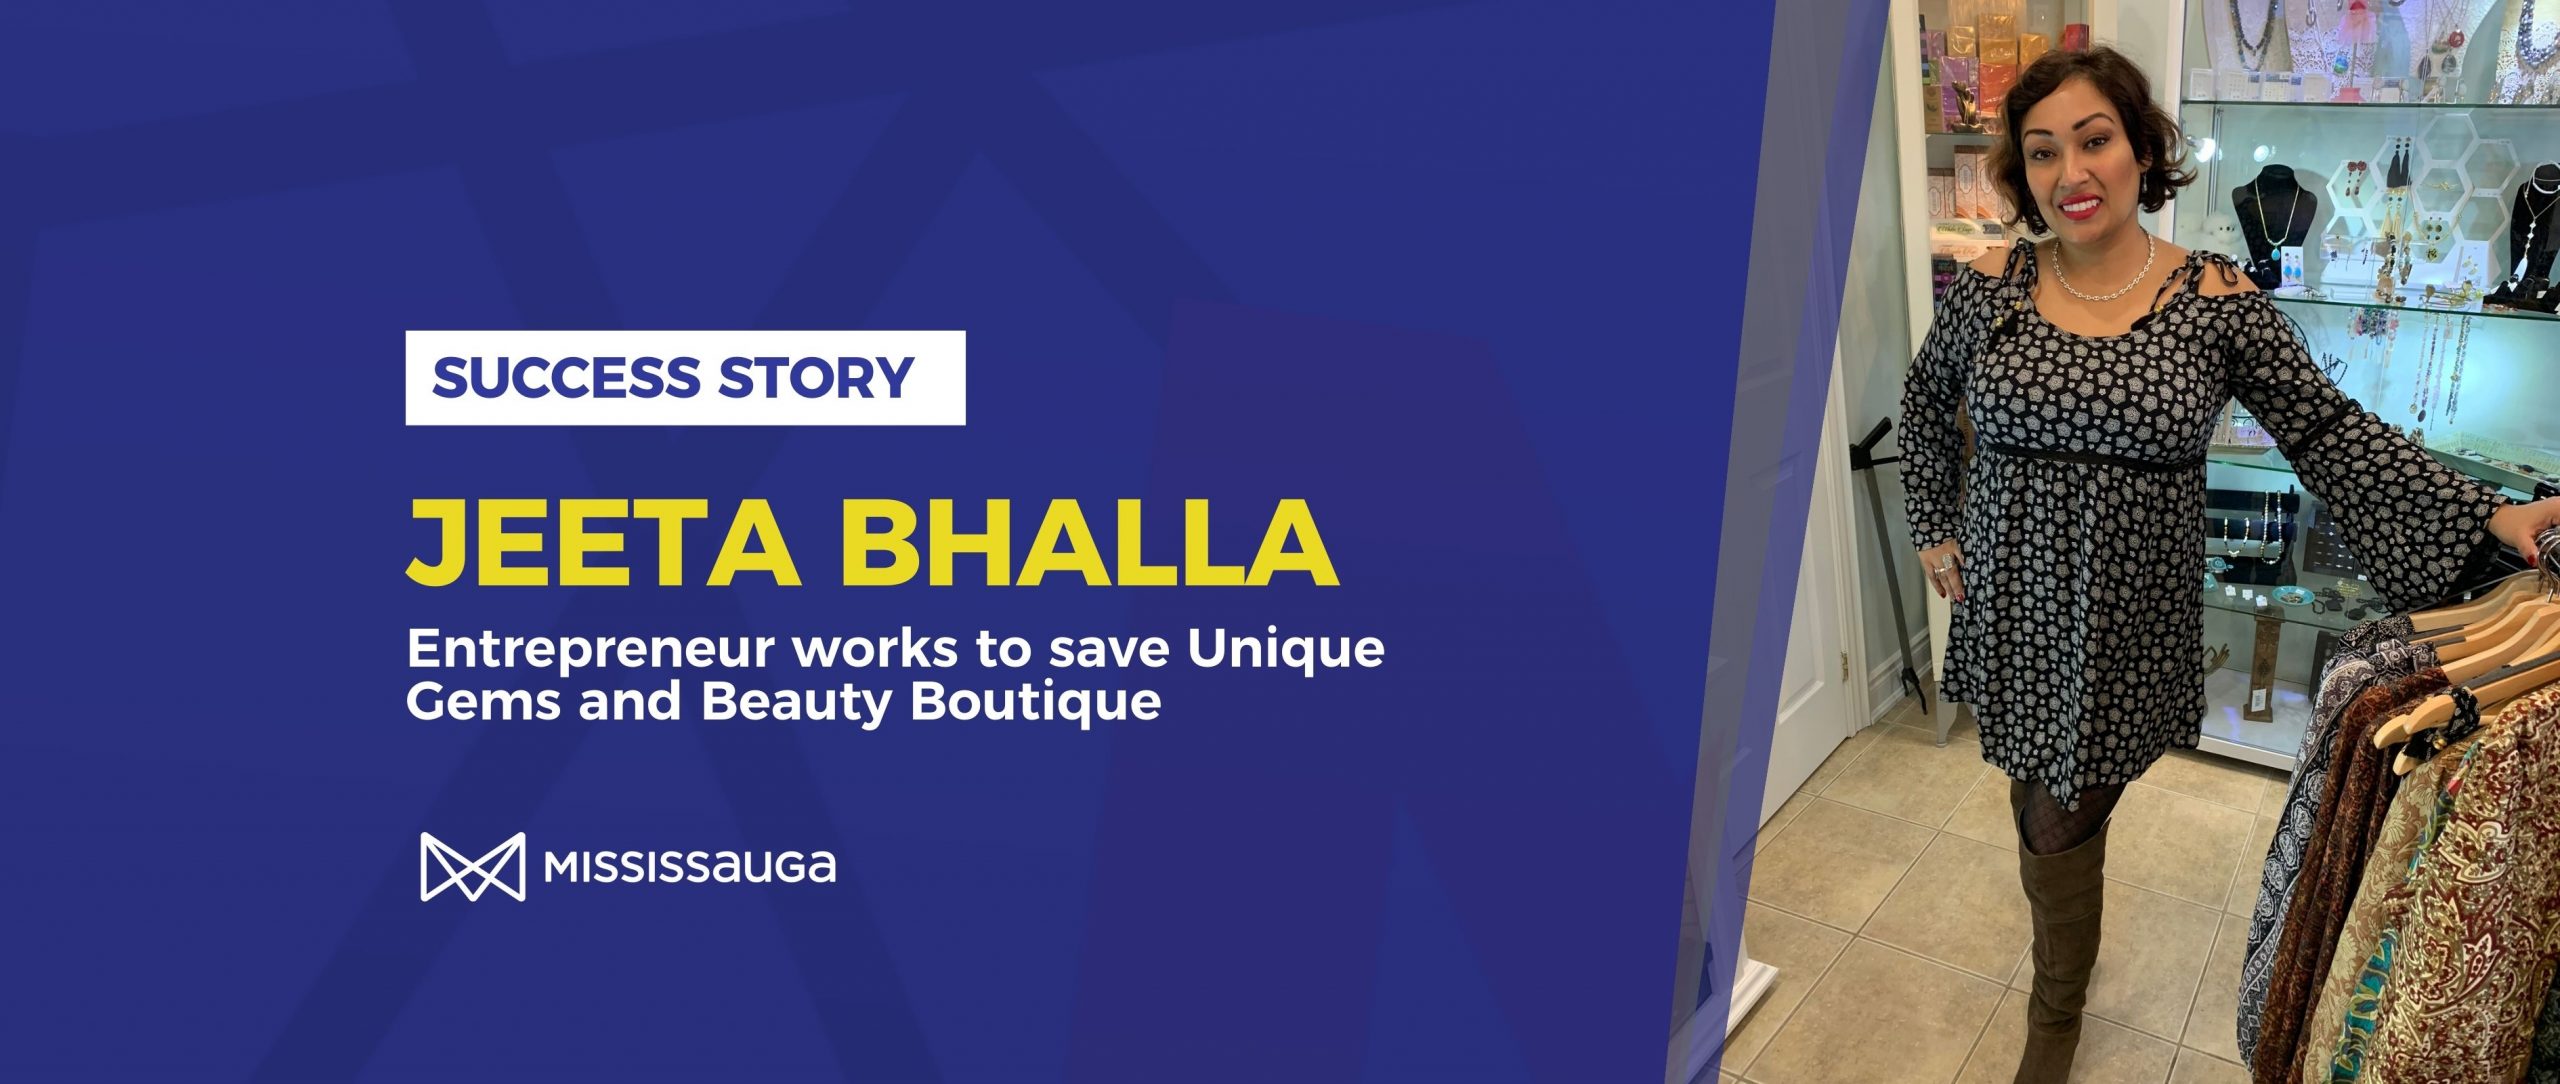 Jeeta Bhalla: Entrepreneur works to save Unique Gems and Beauty Boutique